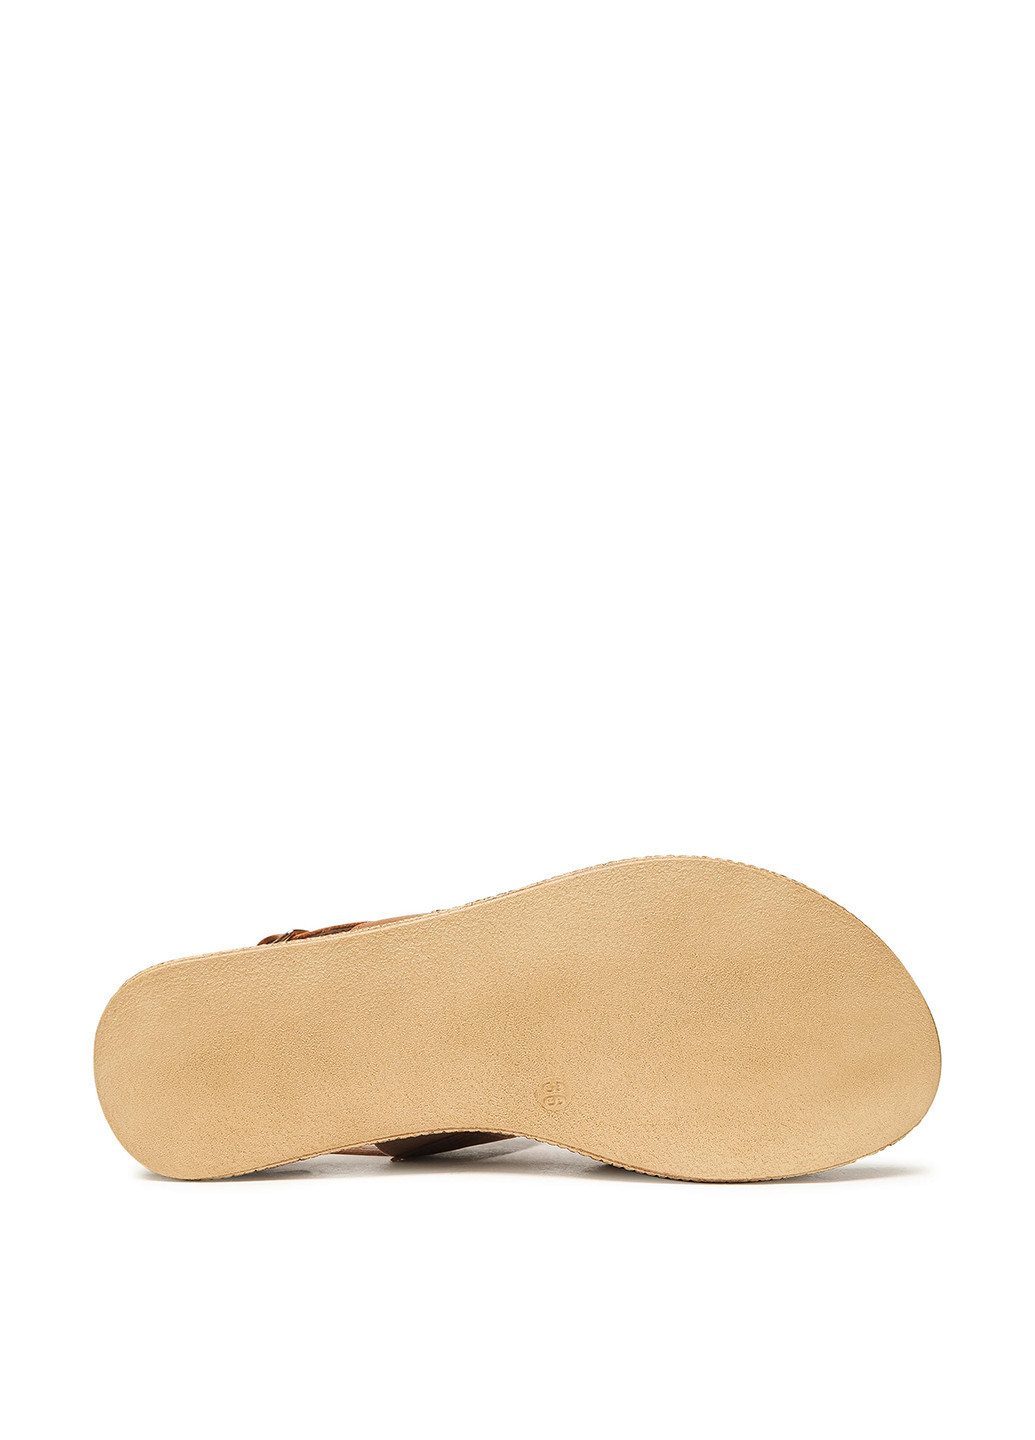 Светло-коричневые сандалі oce-2285-06 Lasocki с ремешком плетение